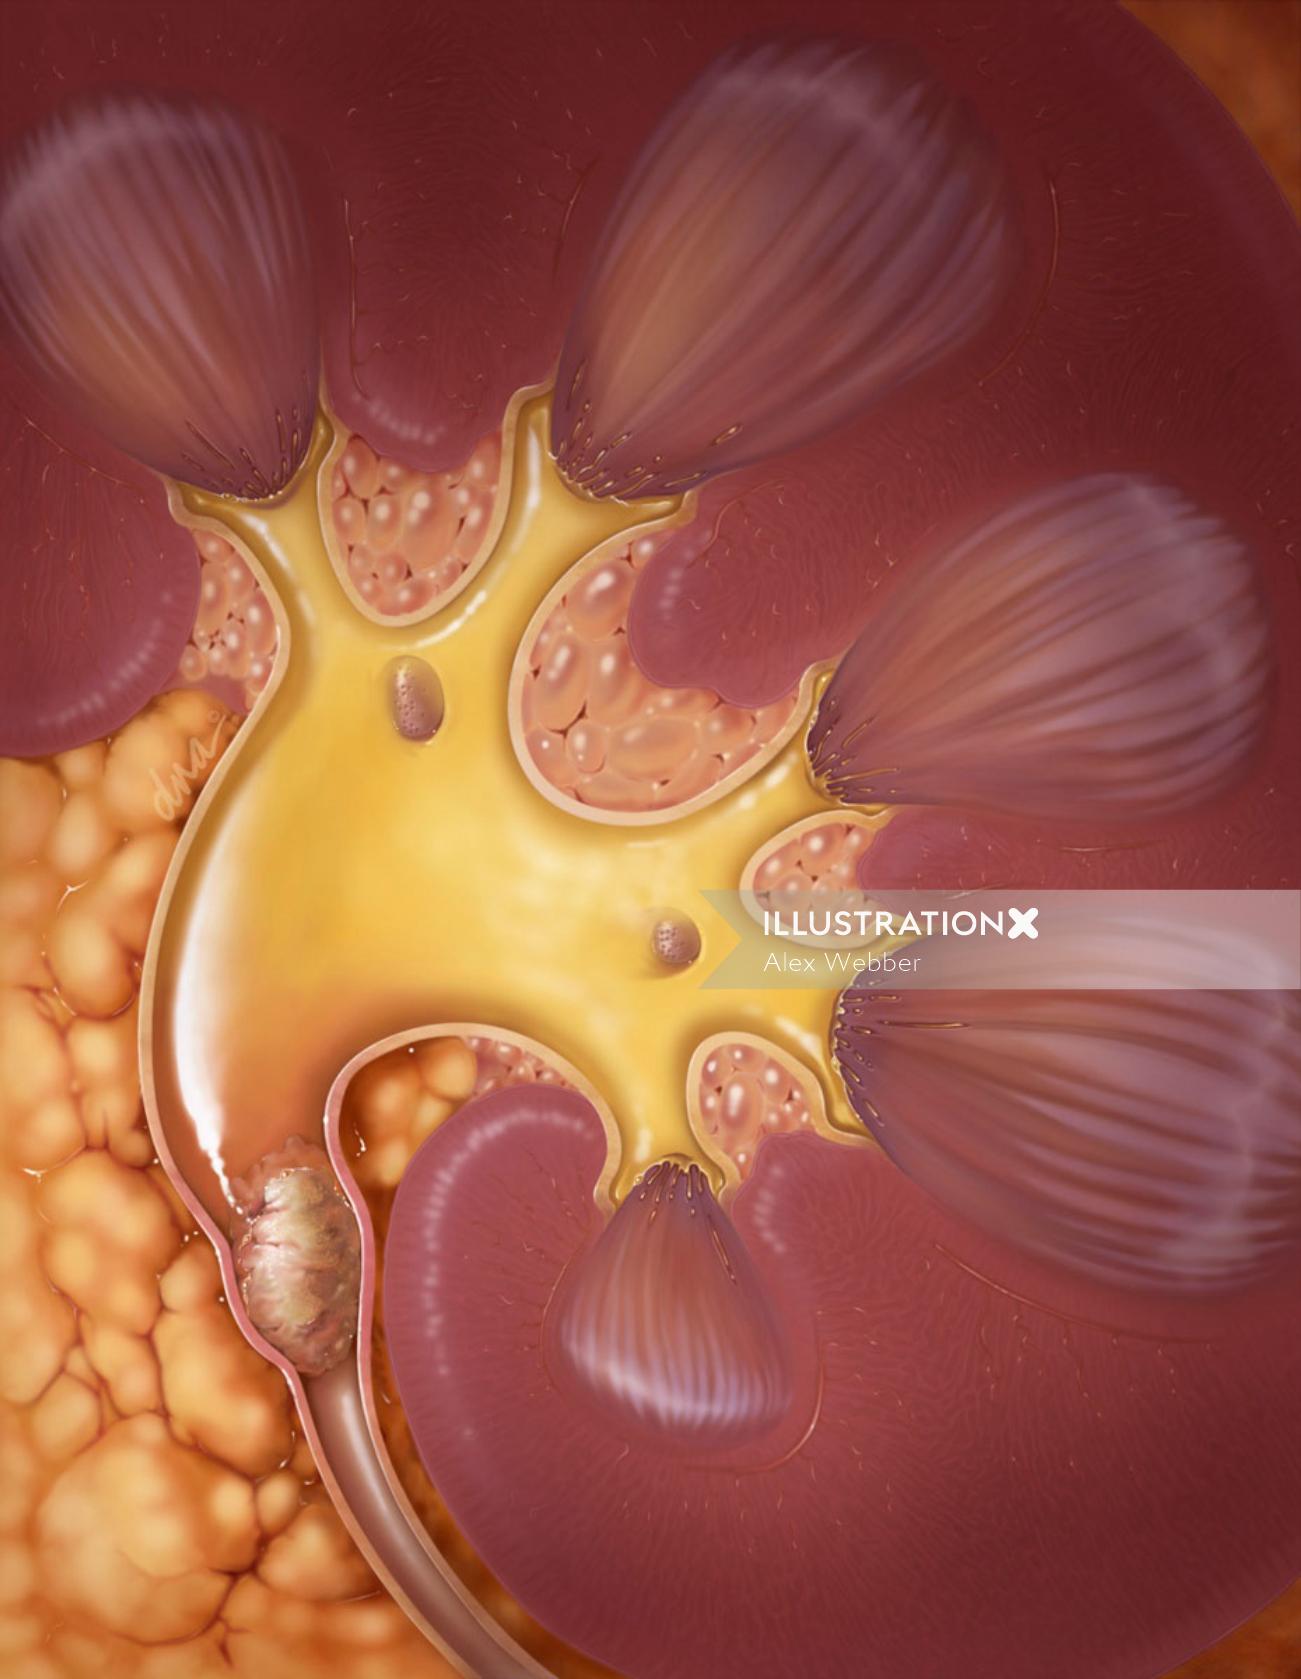 Medical illustration showing kidney stone